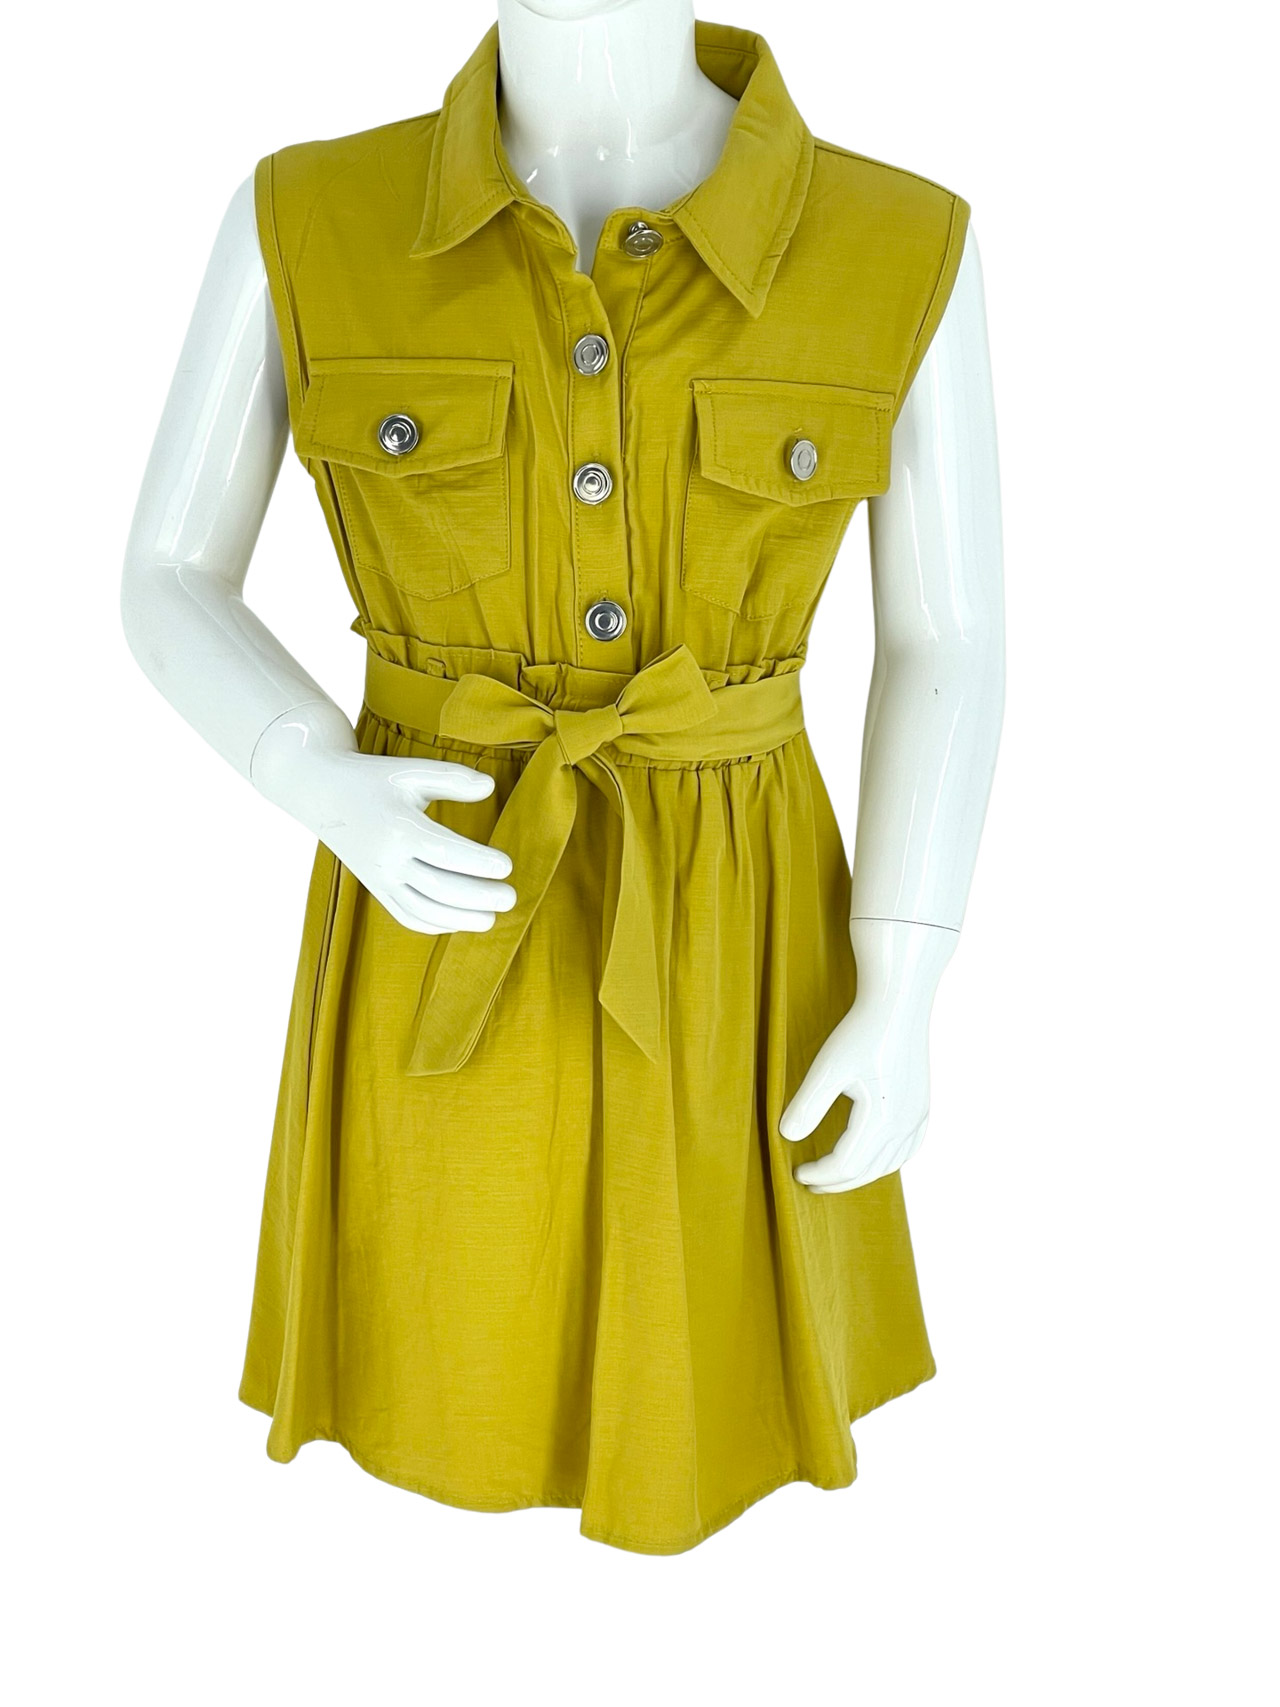 Girl's dress with sleeveless collar code Q5025